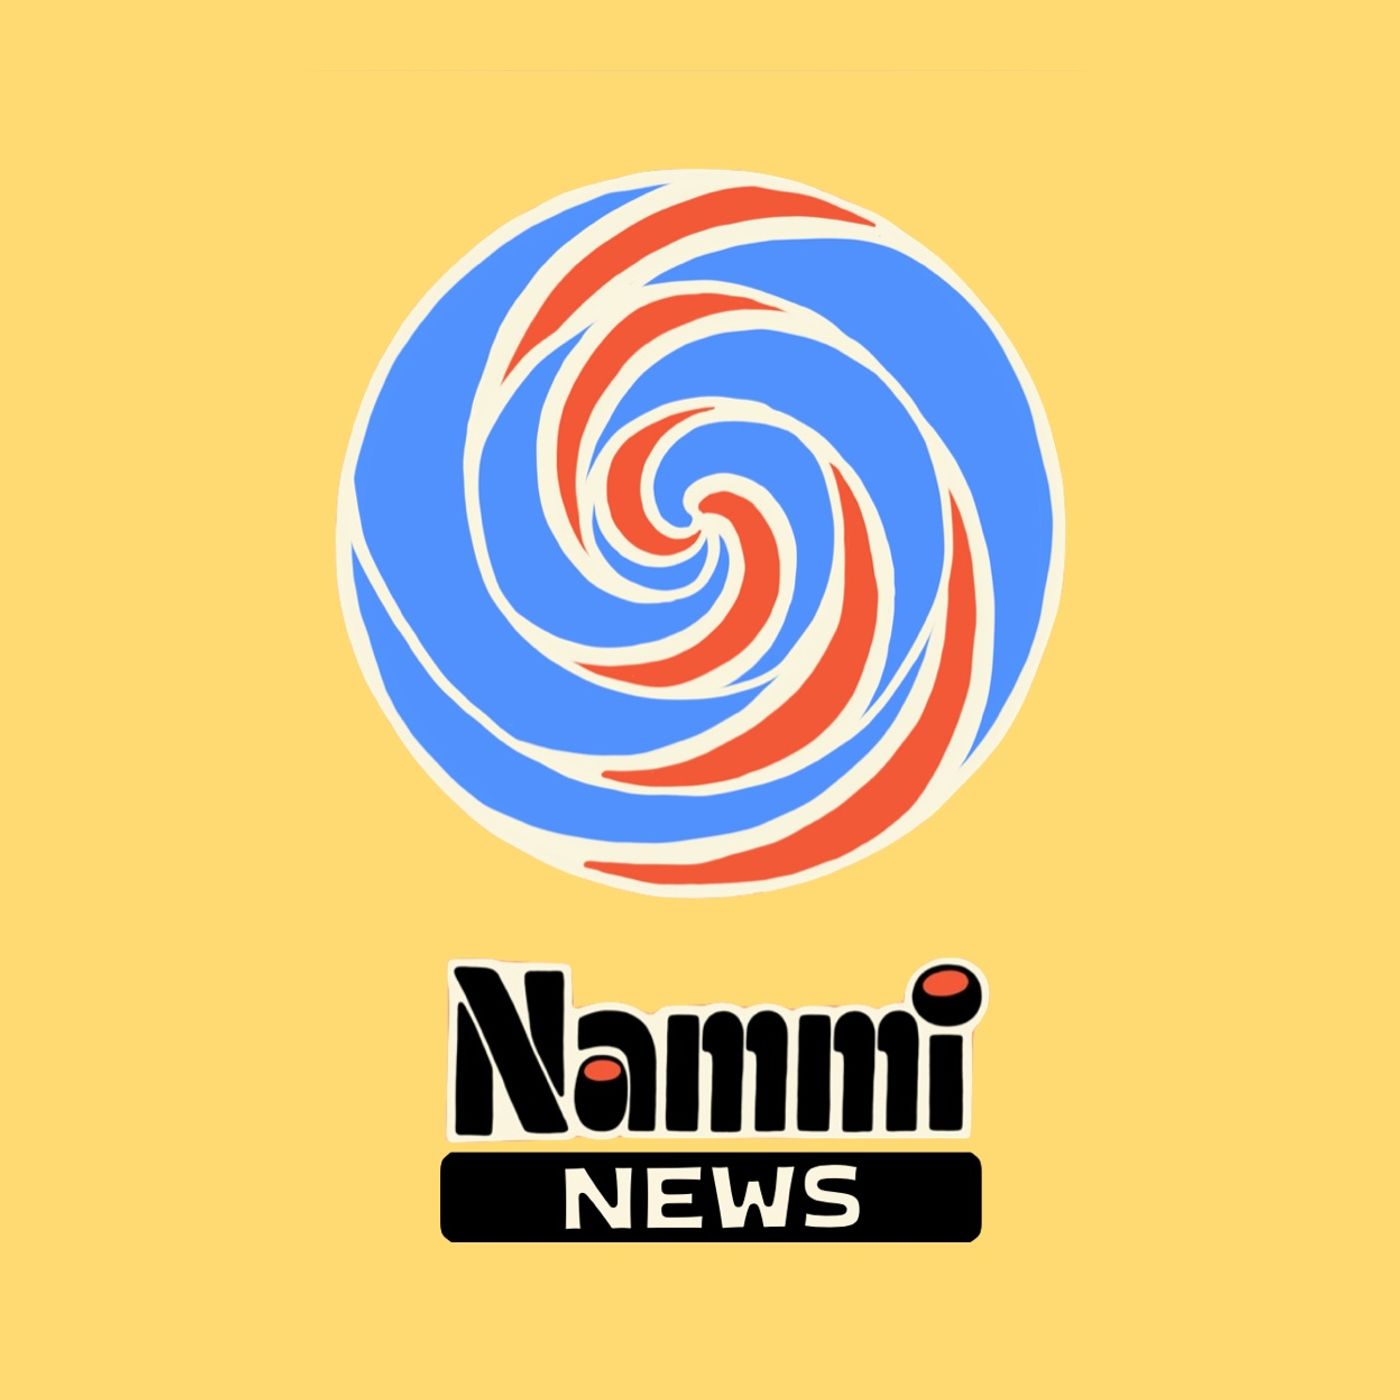 Nammi News - 14 aprile 2021